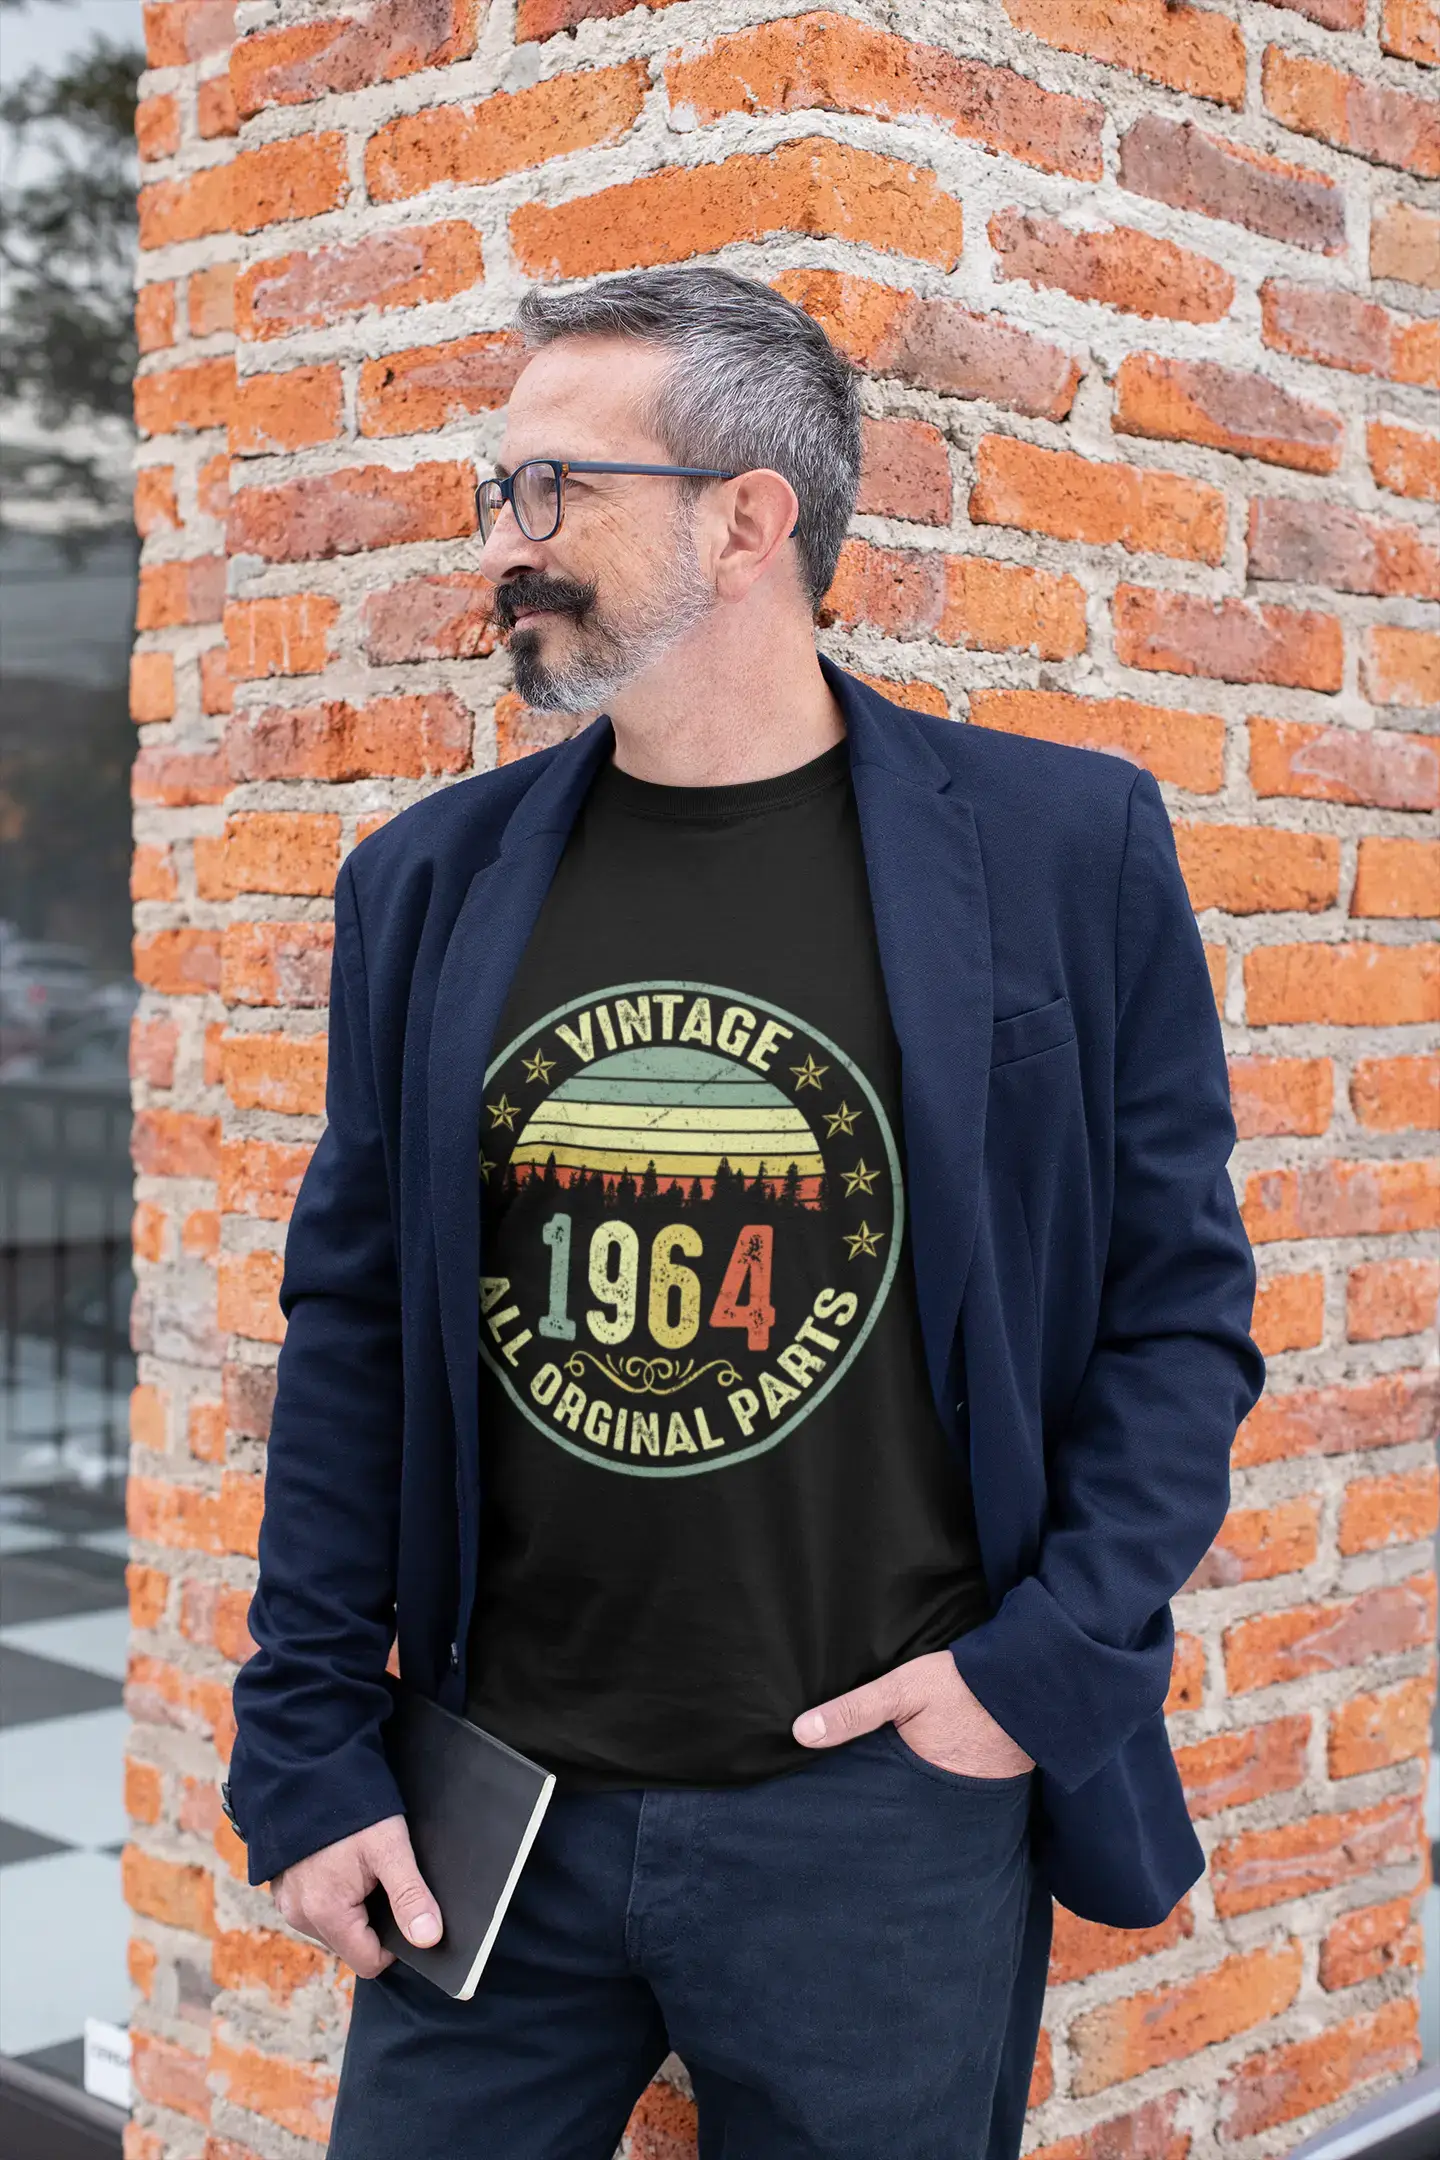 ULTRABASIC Men's T-Shirt Vintage 1964 All Original Parts - Retro 57th Birthday Gift Tee Shirt